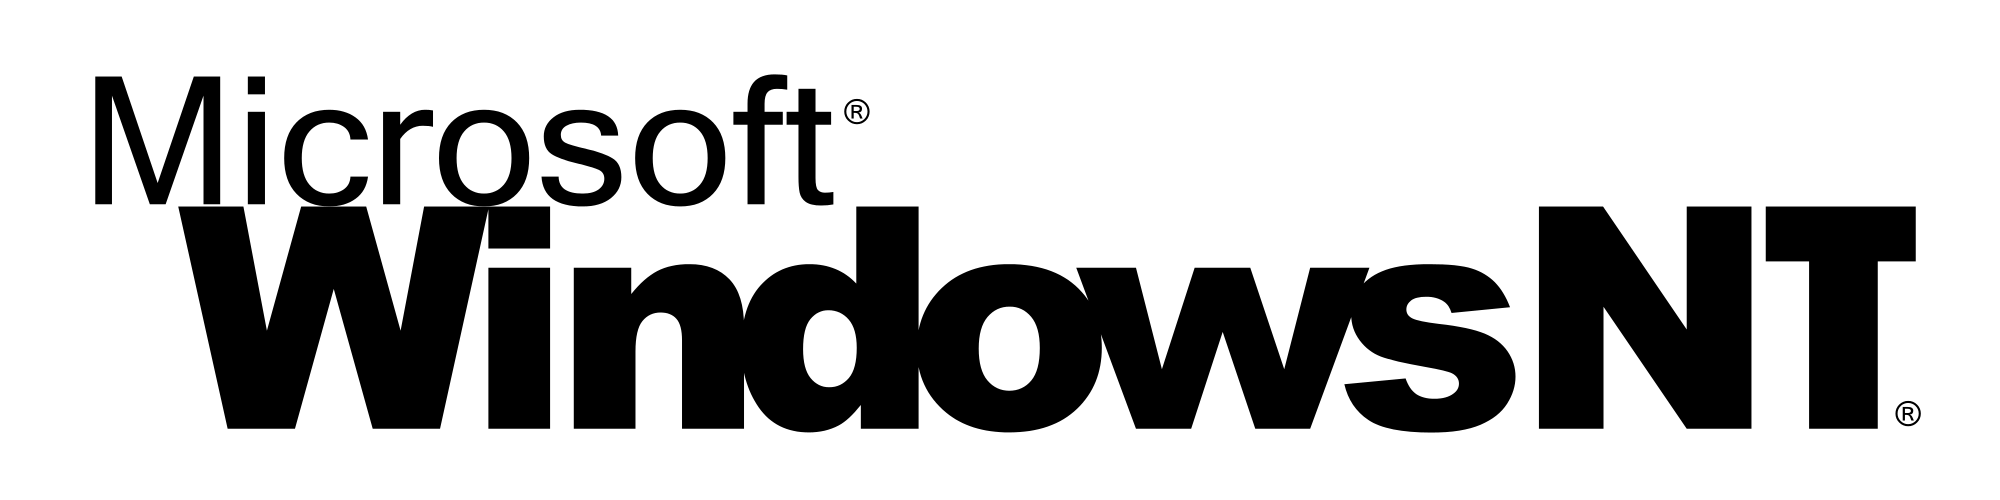 Microsoft Windows NT Logo - File:NT4 logo.svg - Wikimedia Commons